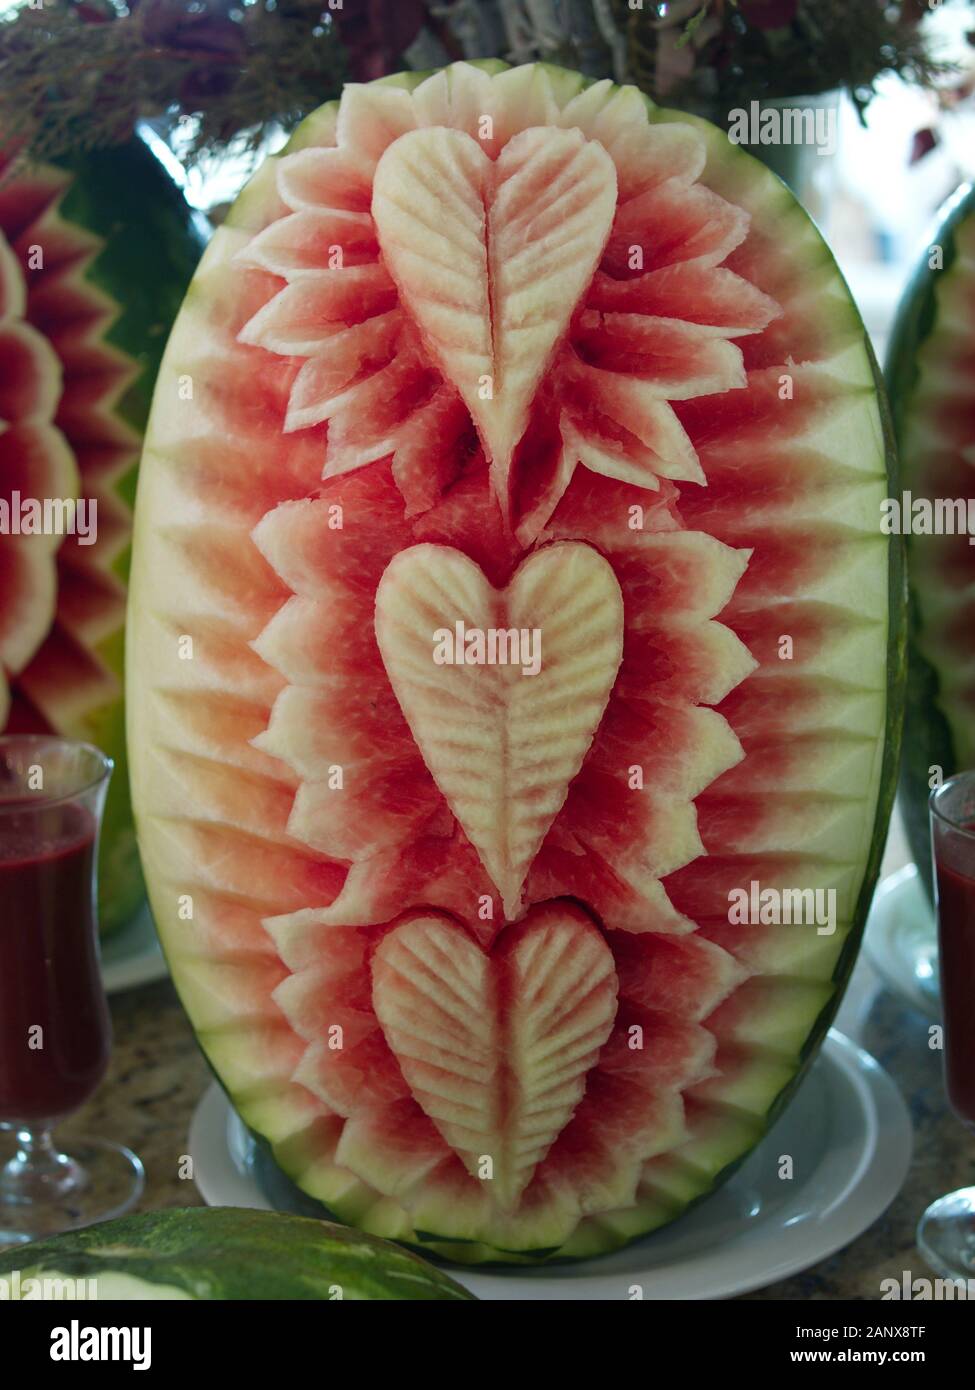 Watermelon carving art name 'Mukimono'. Traditional Japanese art. Stock Photo